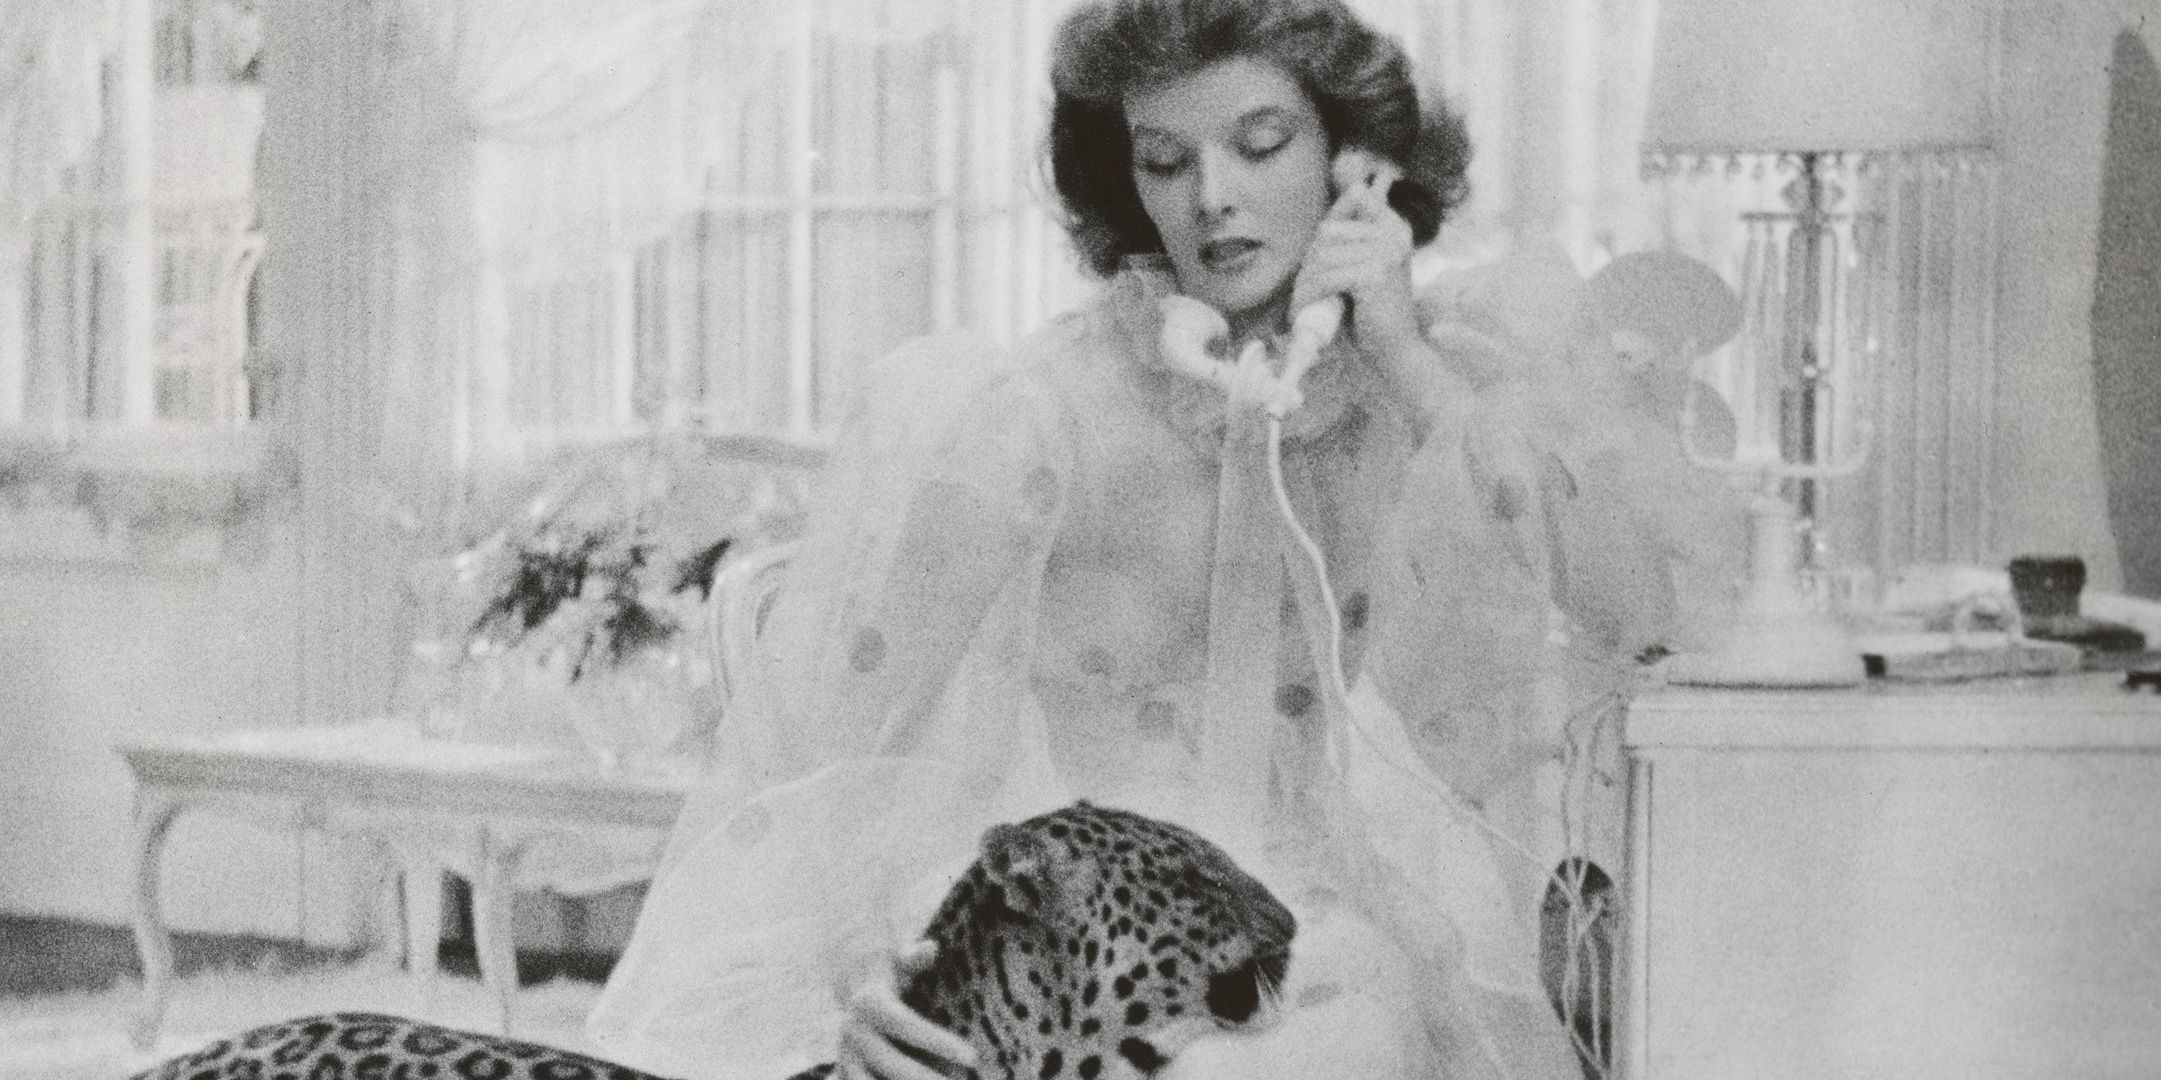 Katherine Hepburn 10 Most Iconic Roles Ranked (According to IMBD)